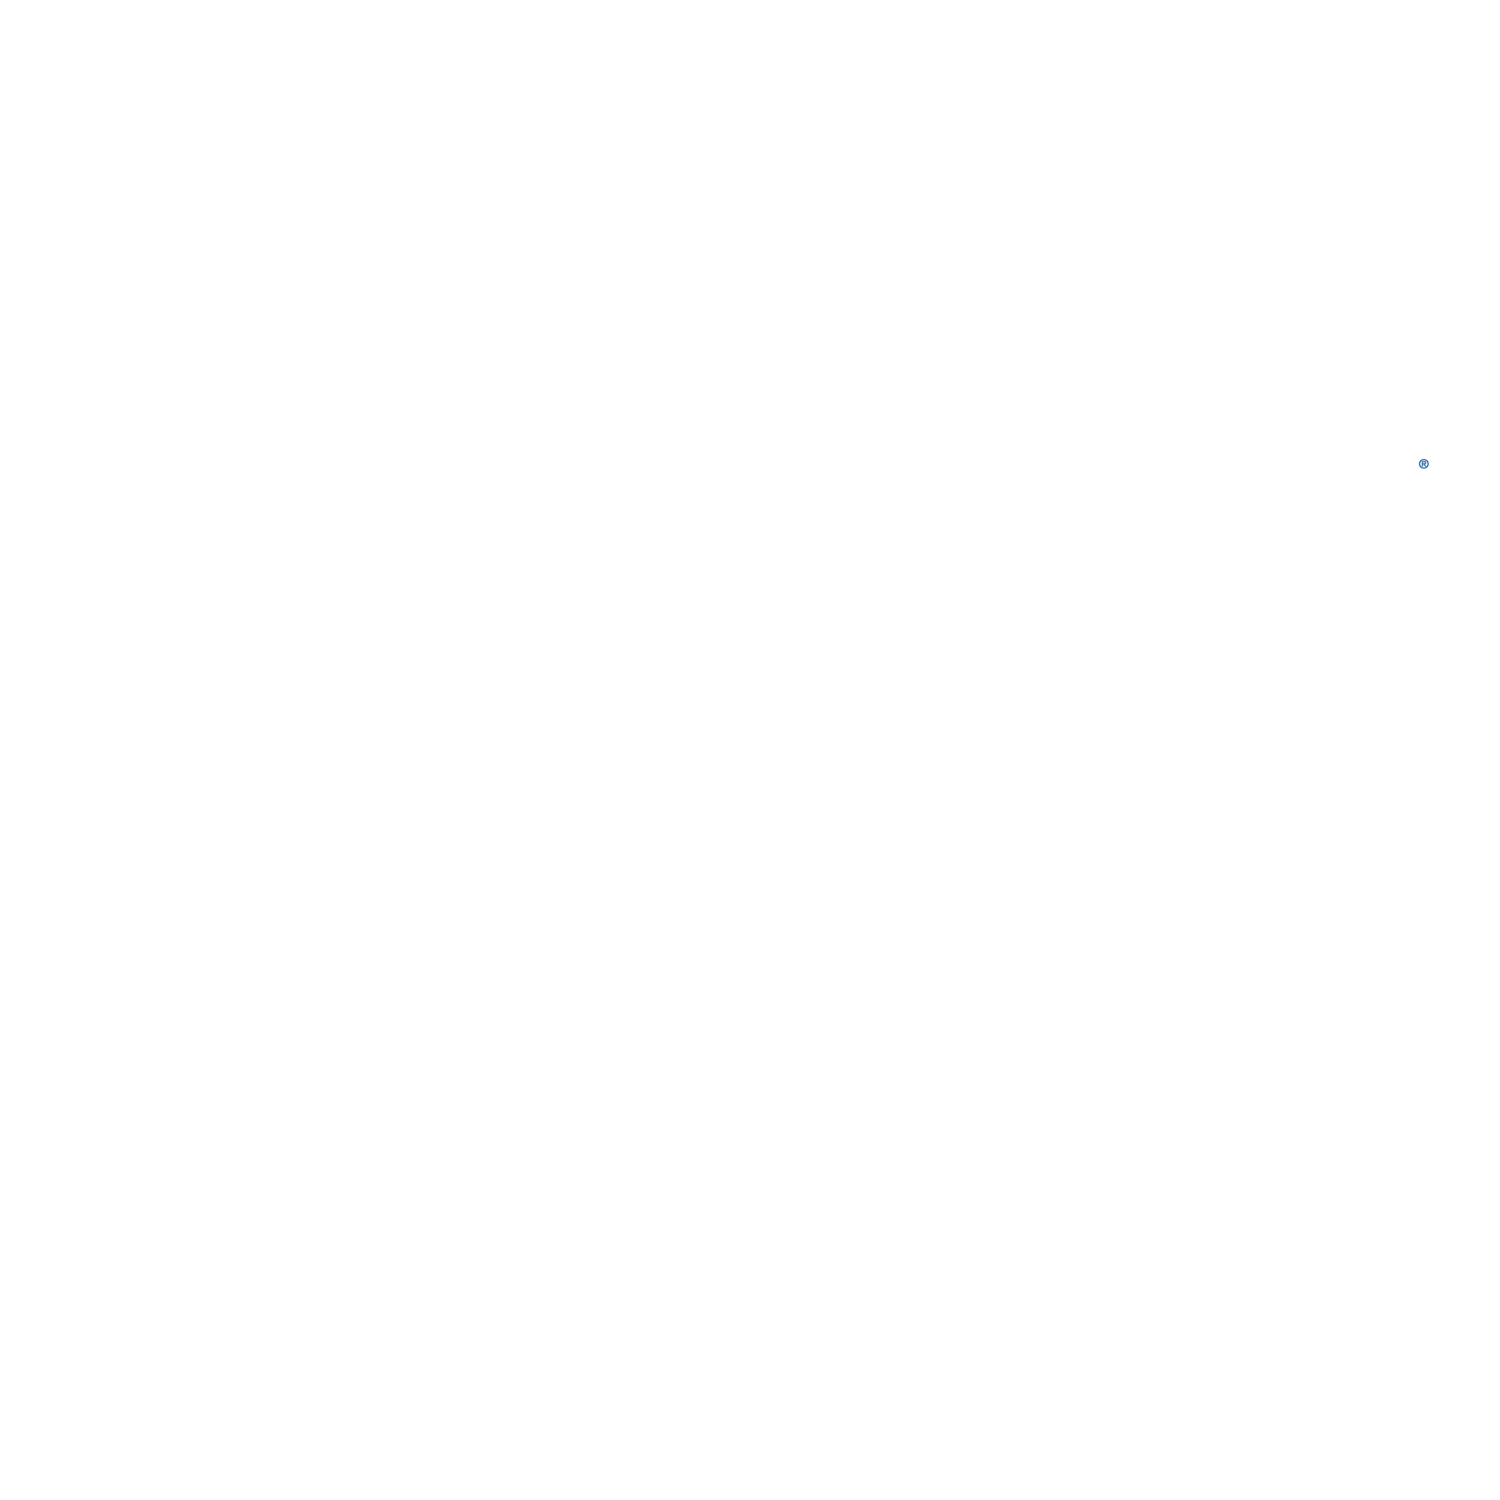 Lowe’s Innovation Labs